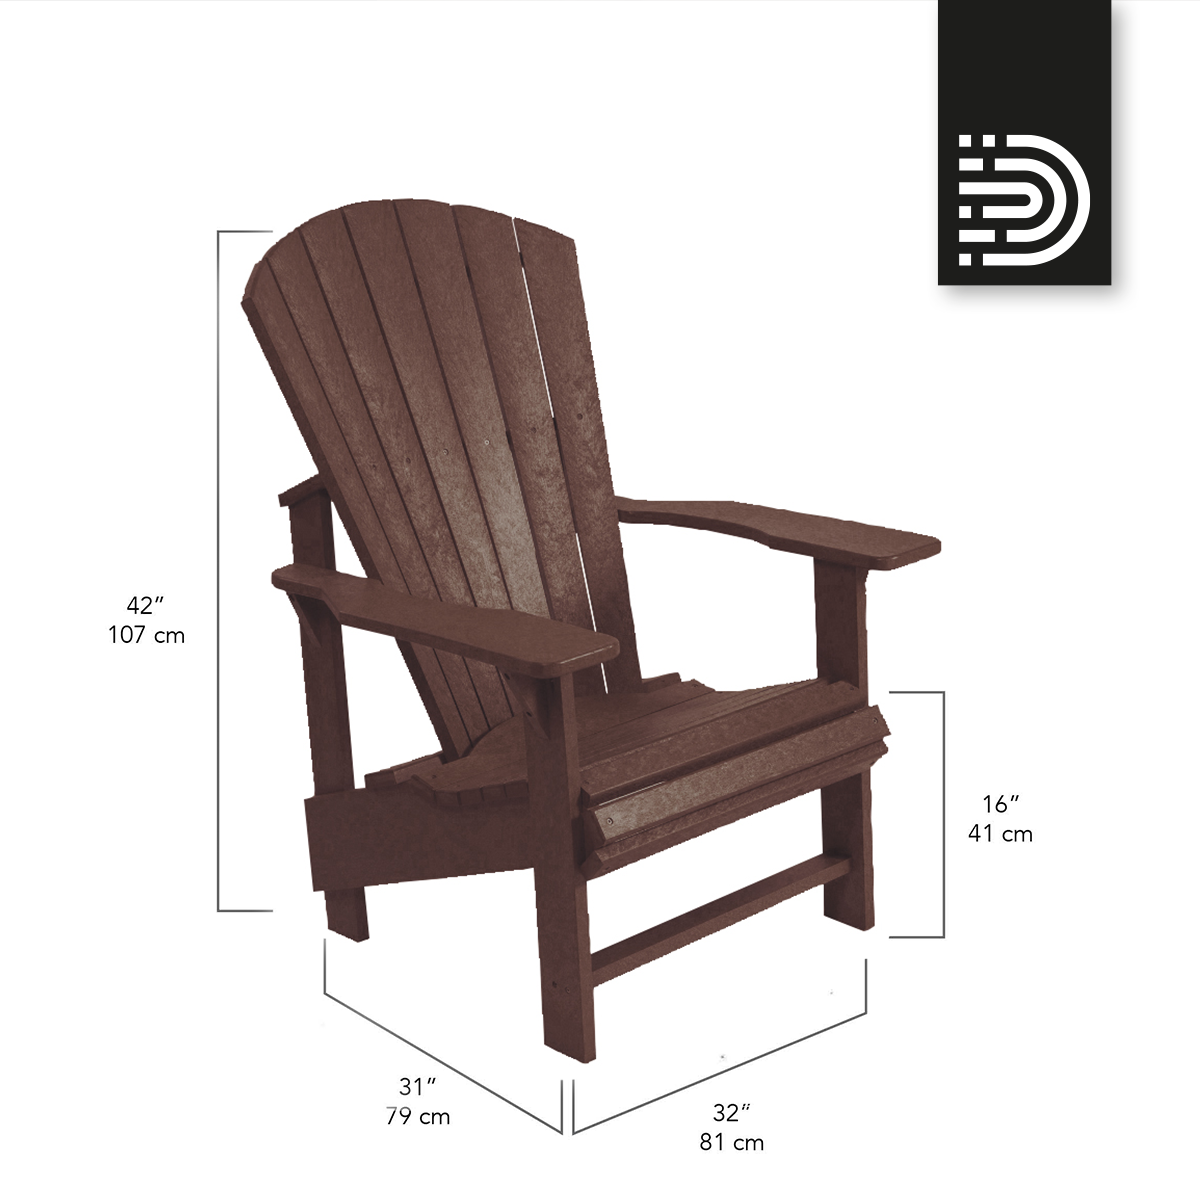 C03 Upright Adirondack Chair -  chocolate 16